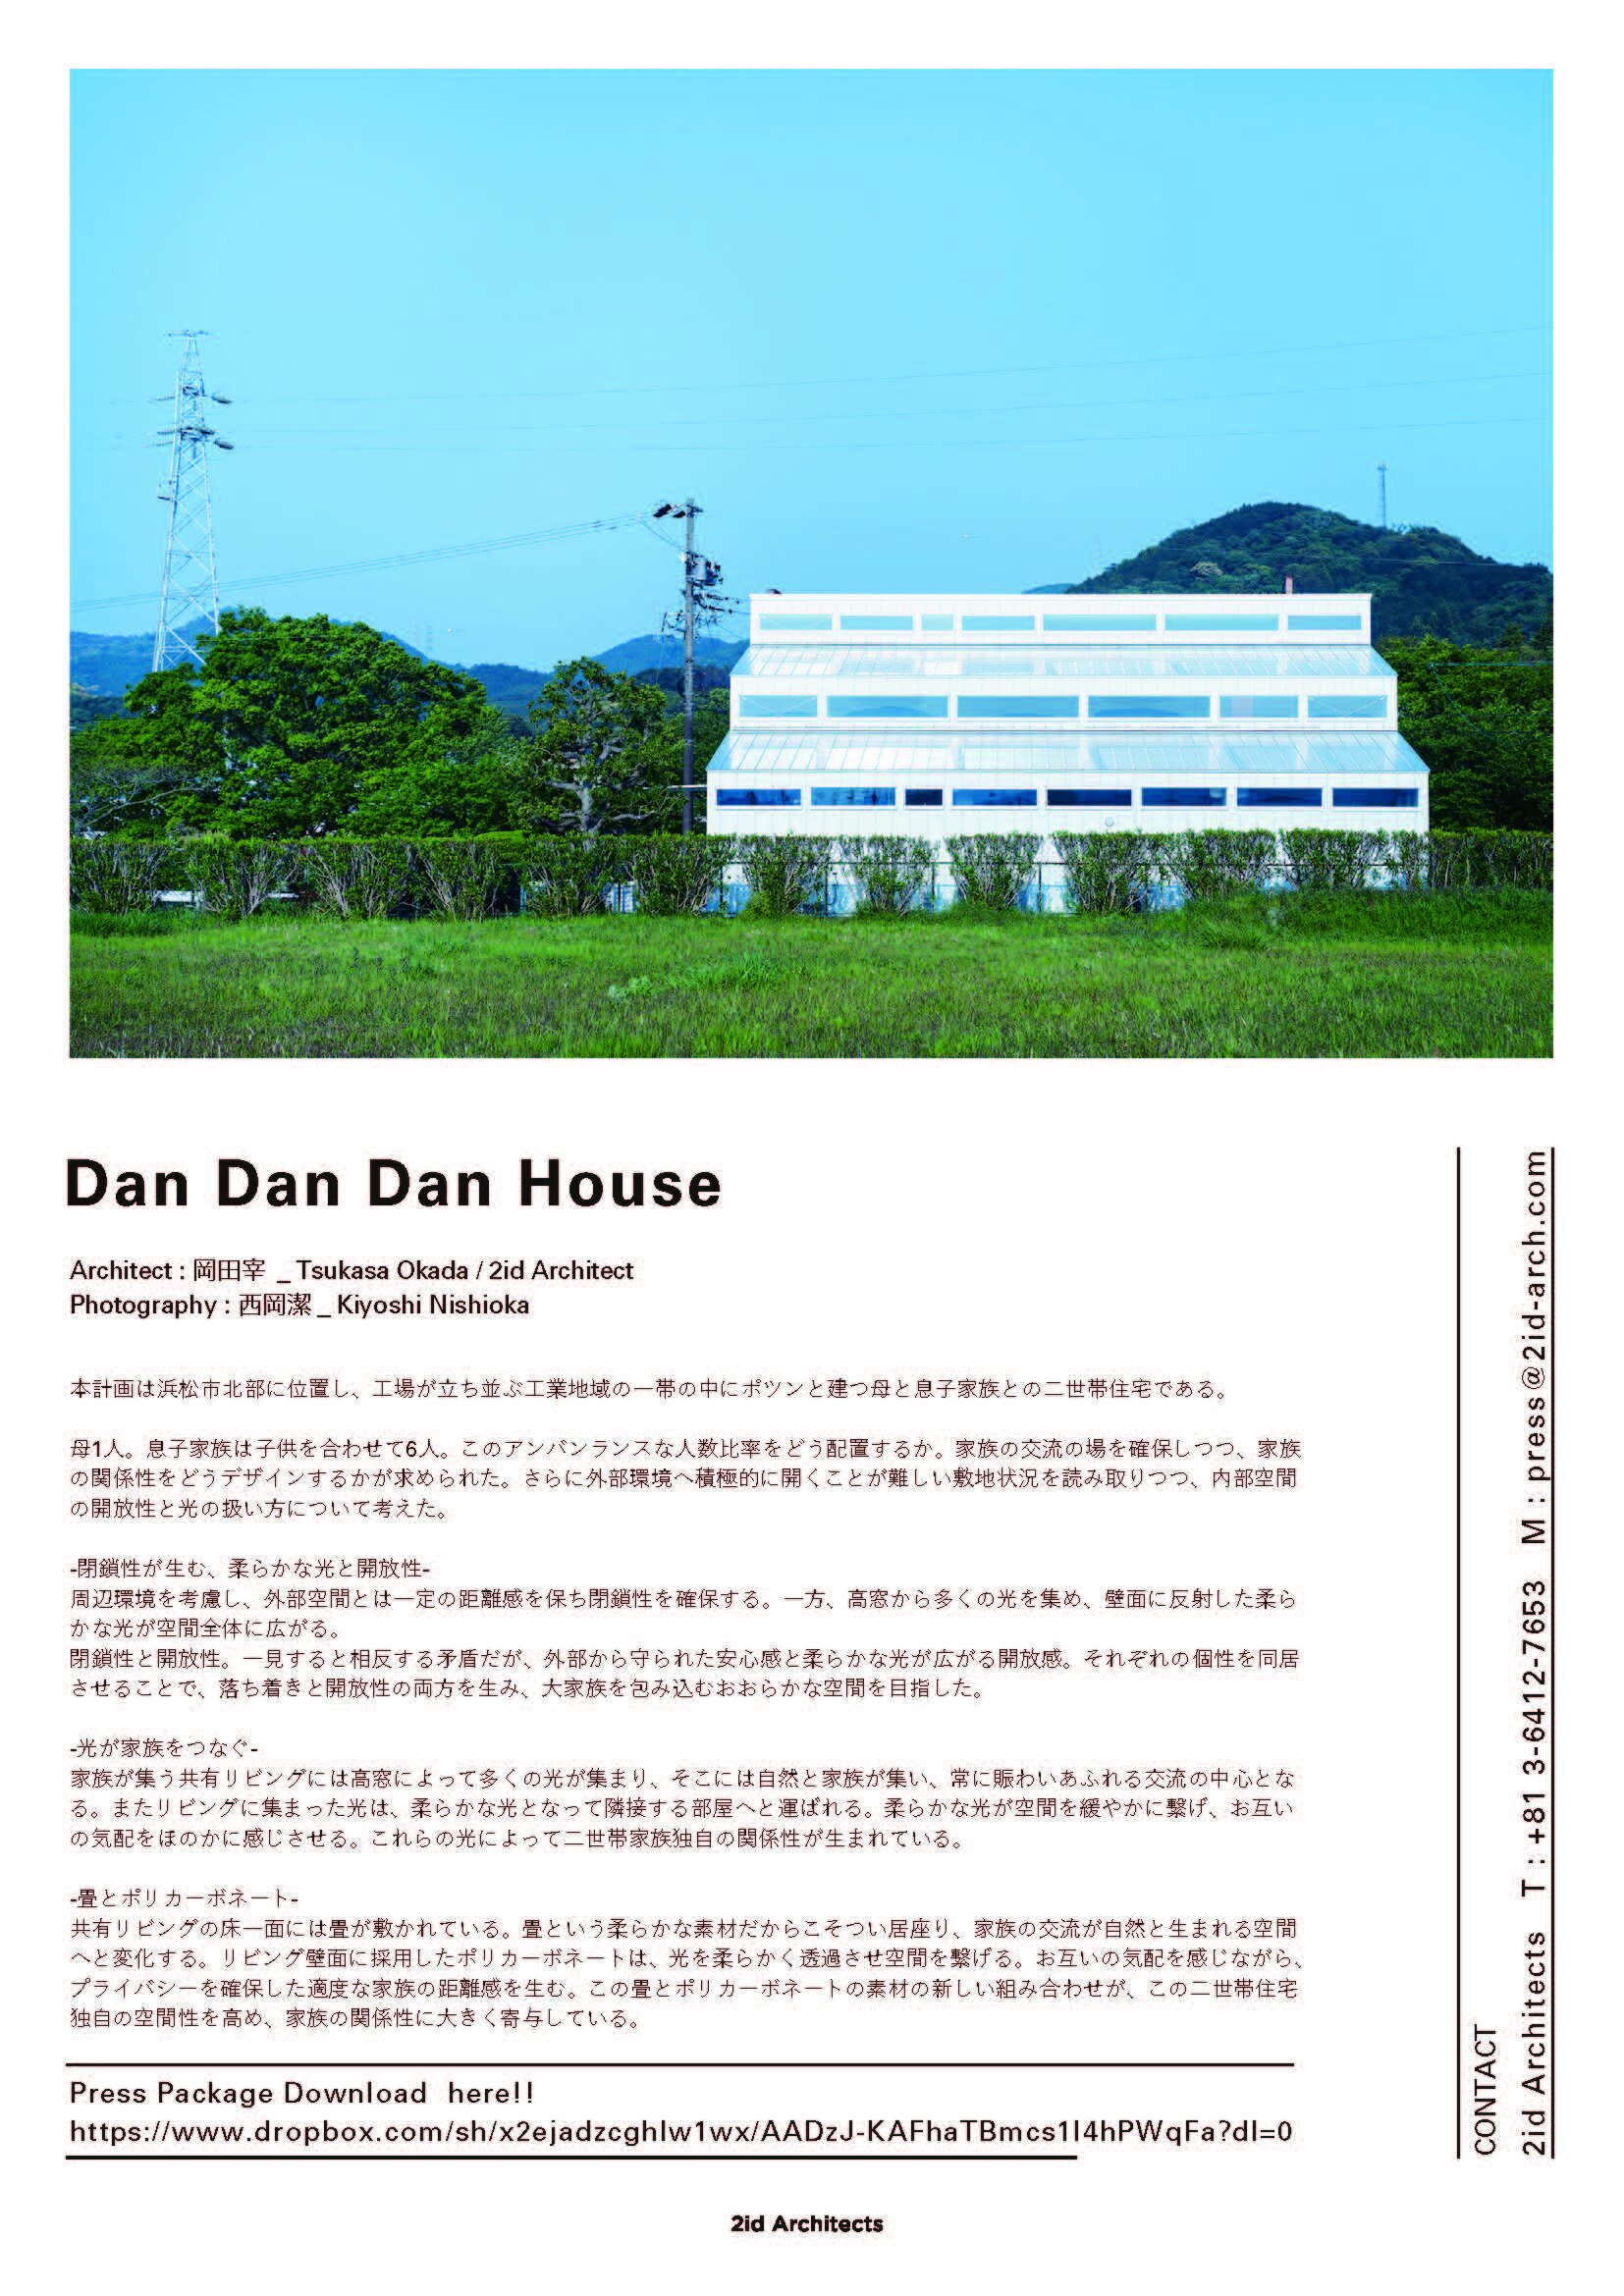 Dan Dan Dan House_jp 1.jpg